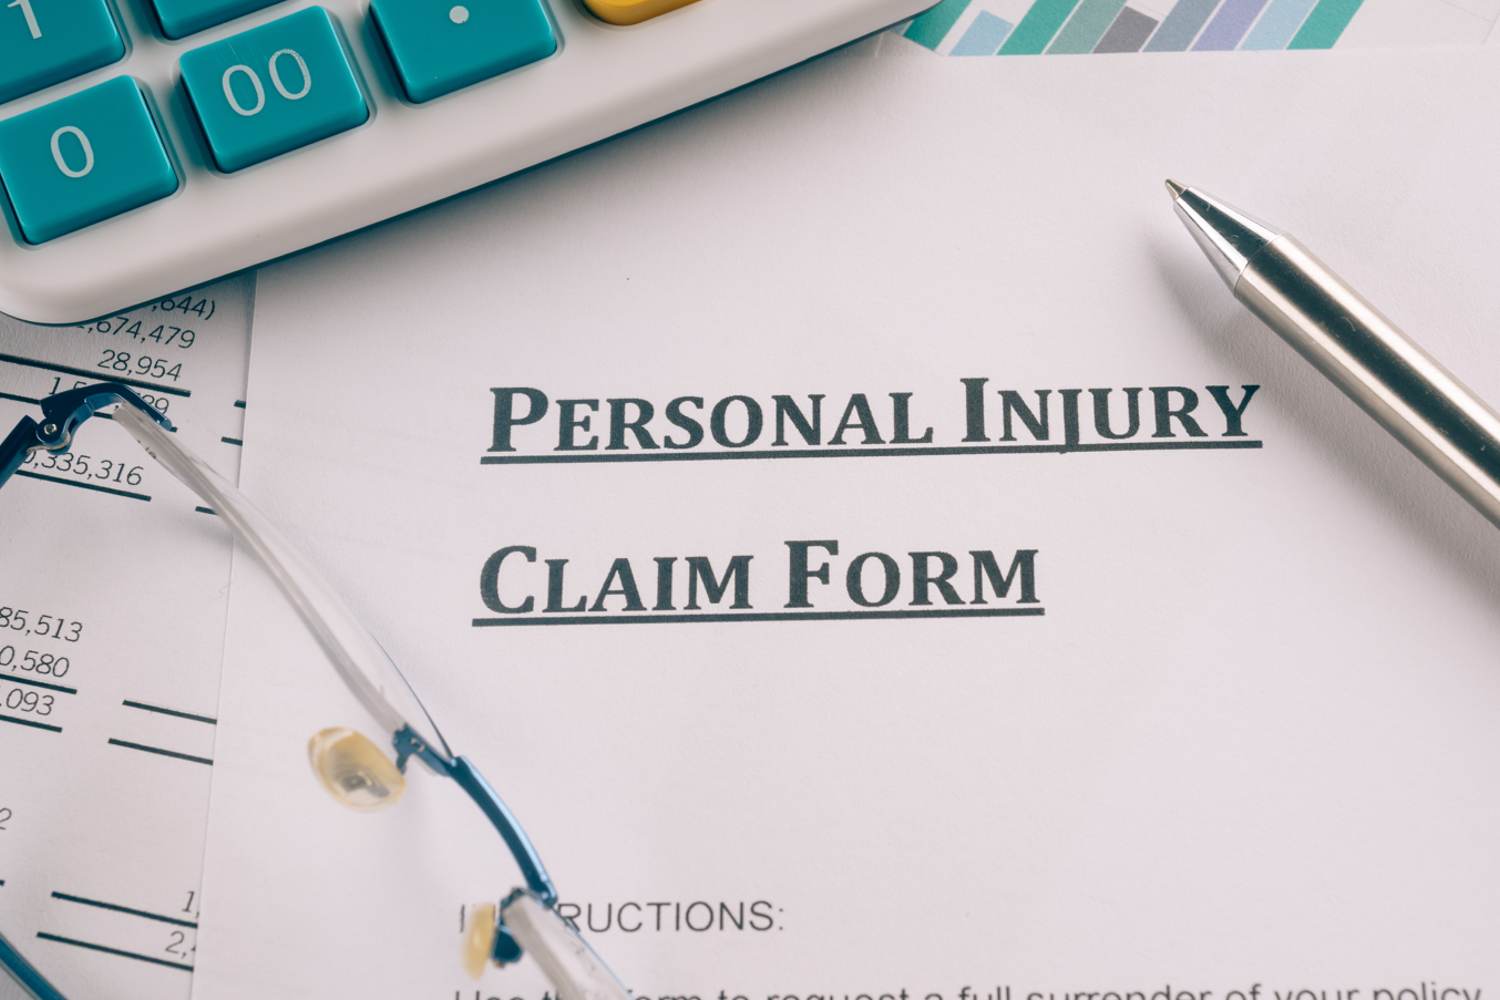 Personal injury claim form